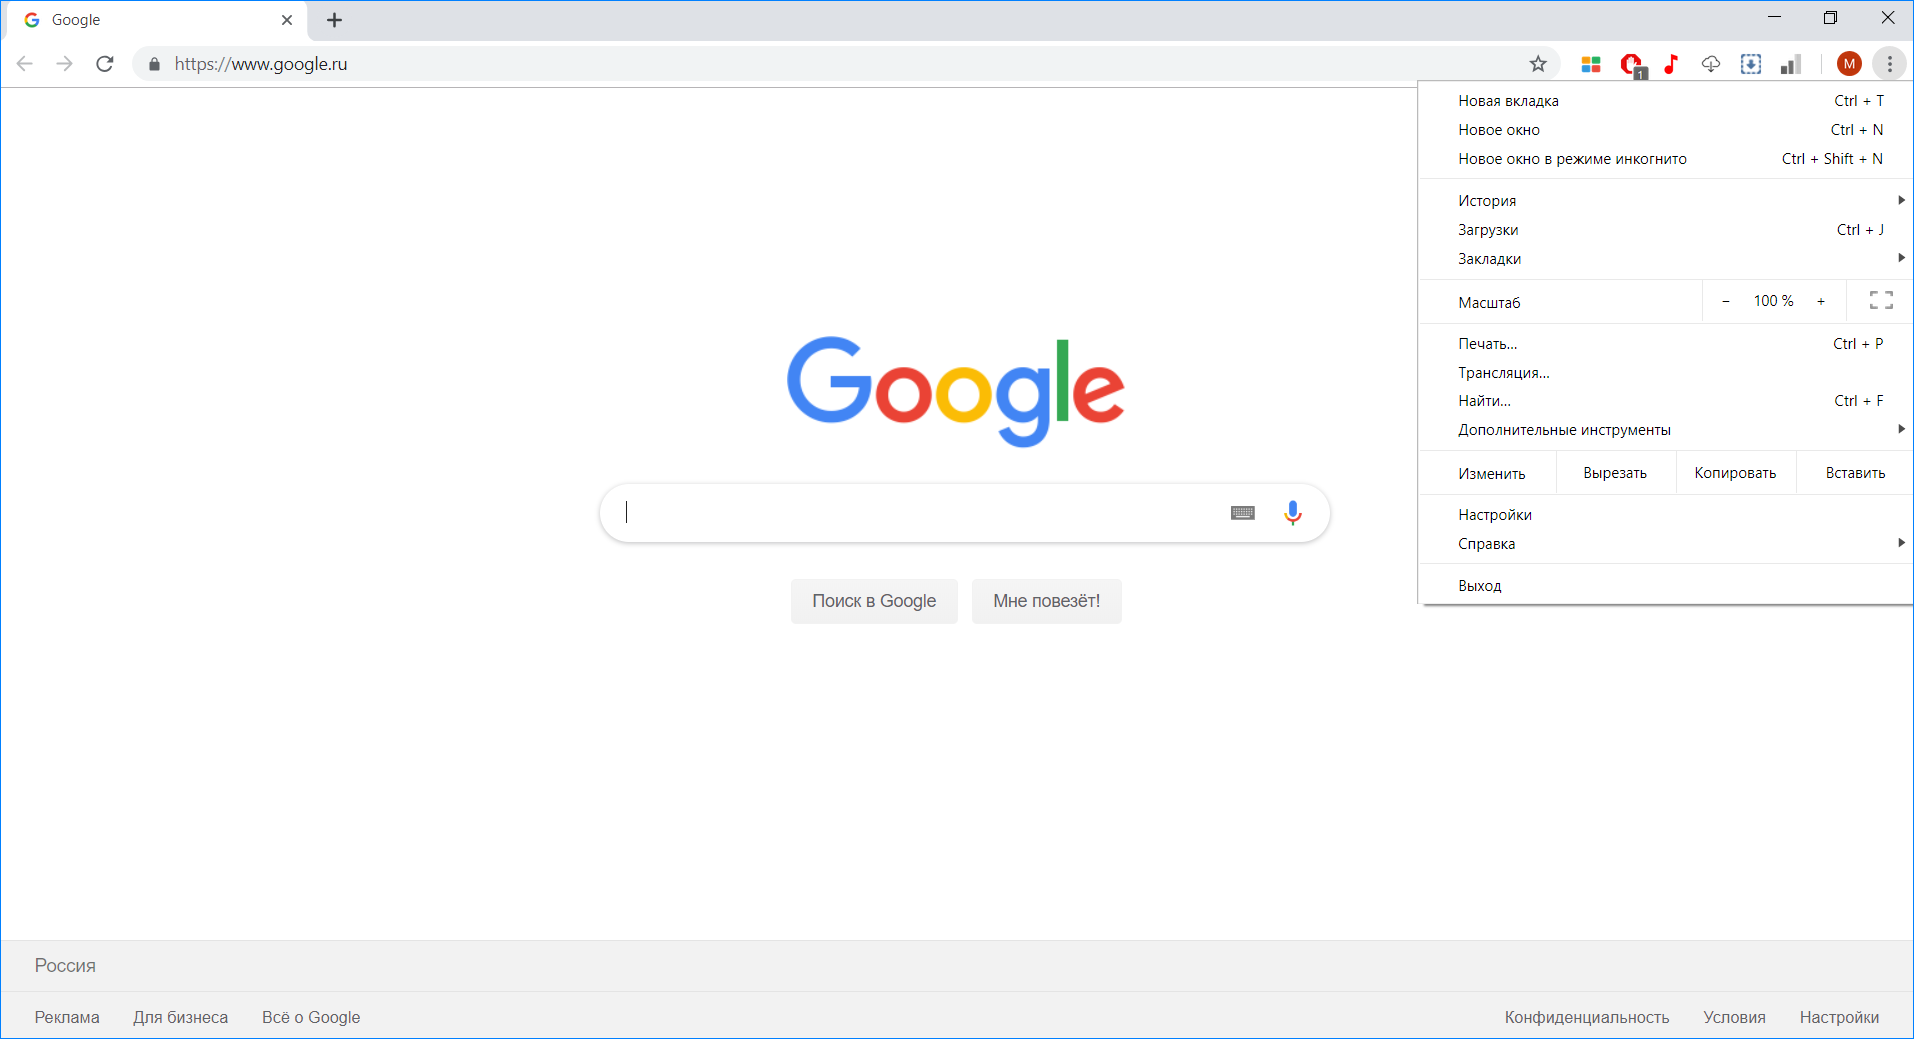 Интерфейс Google Chrome